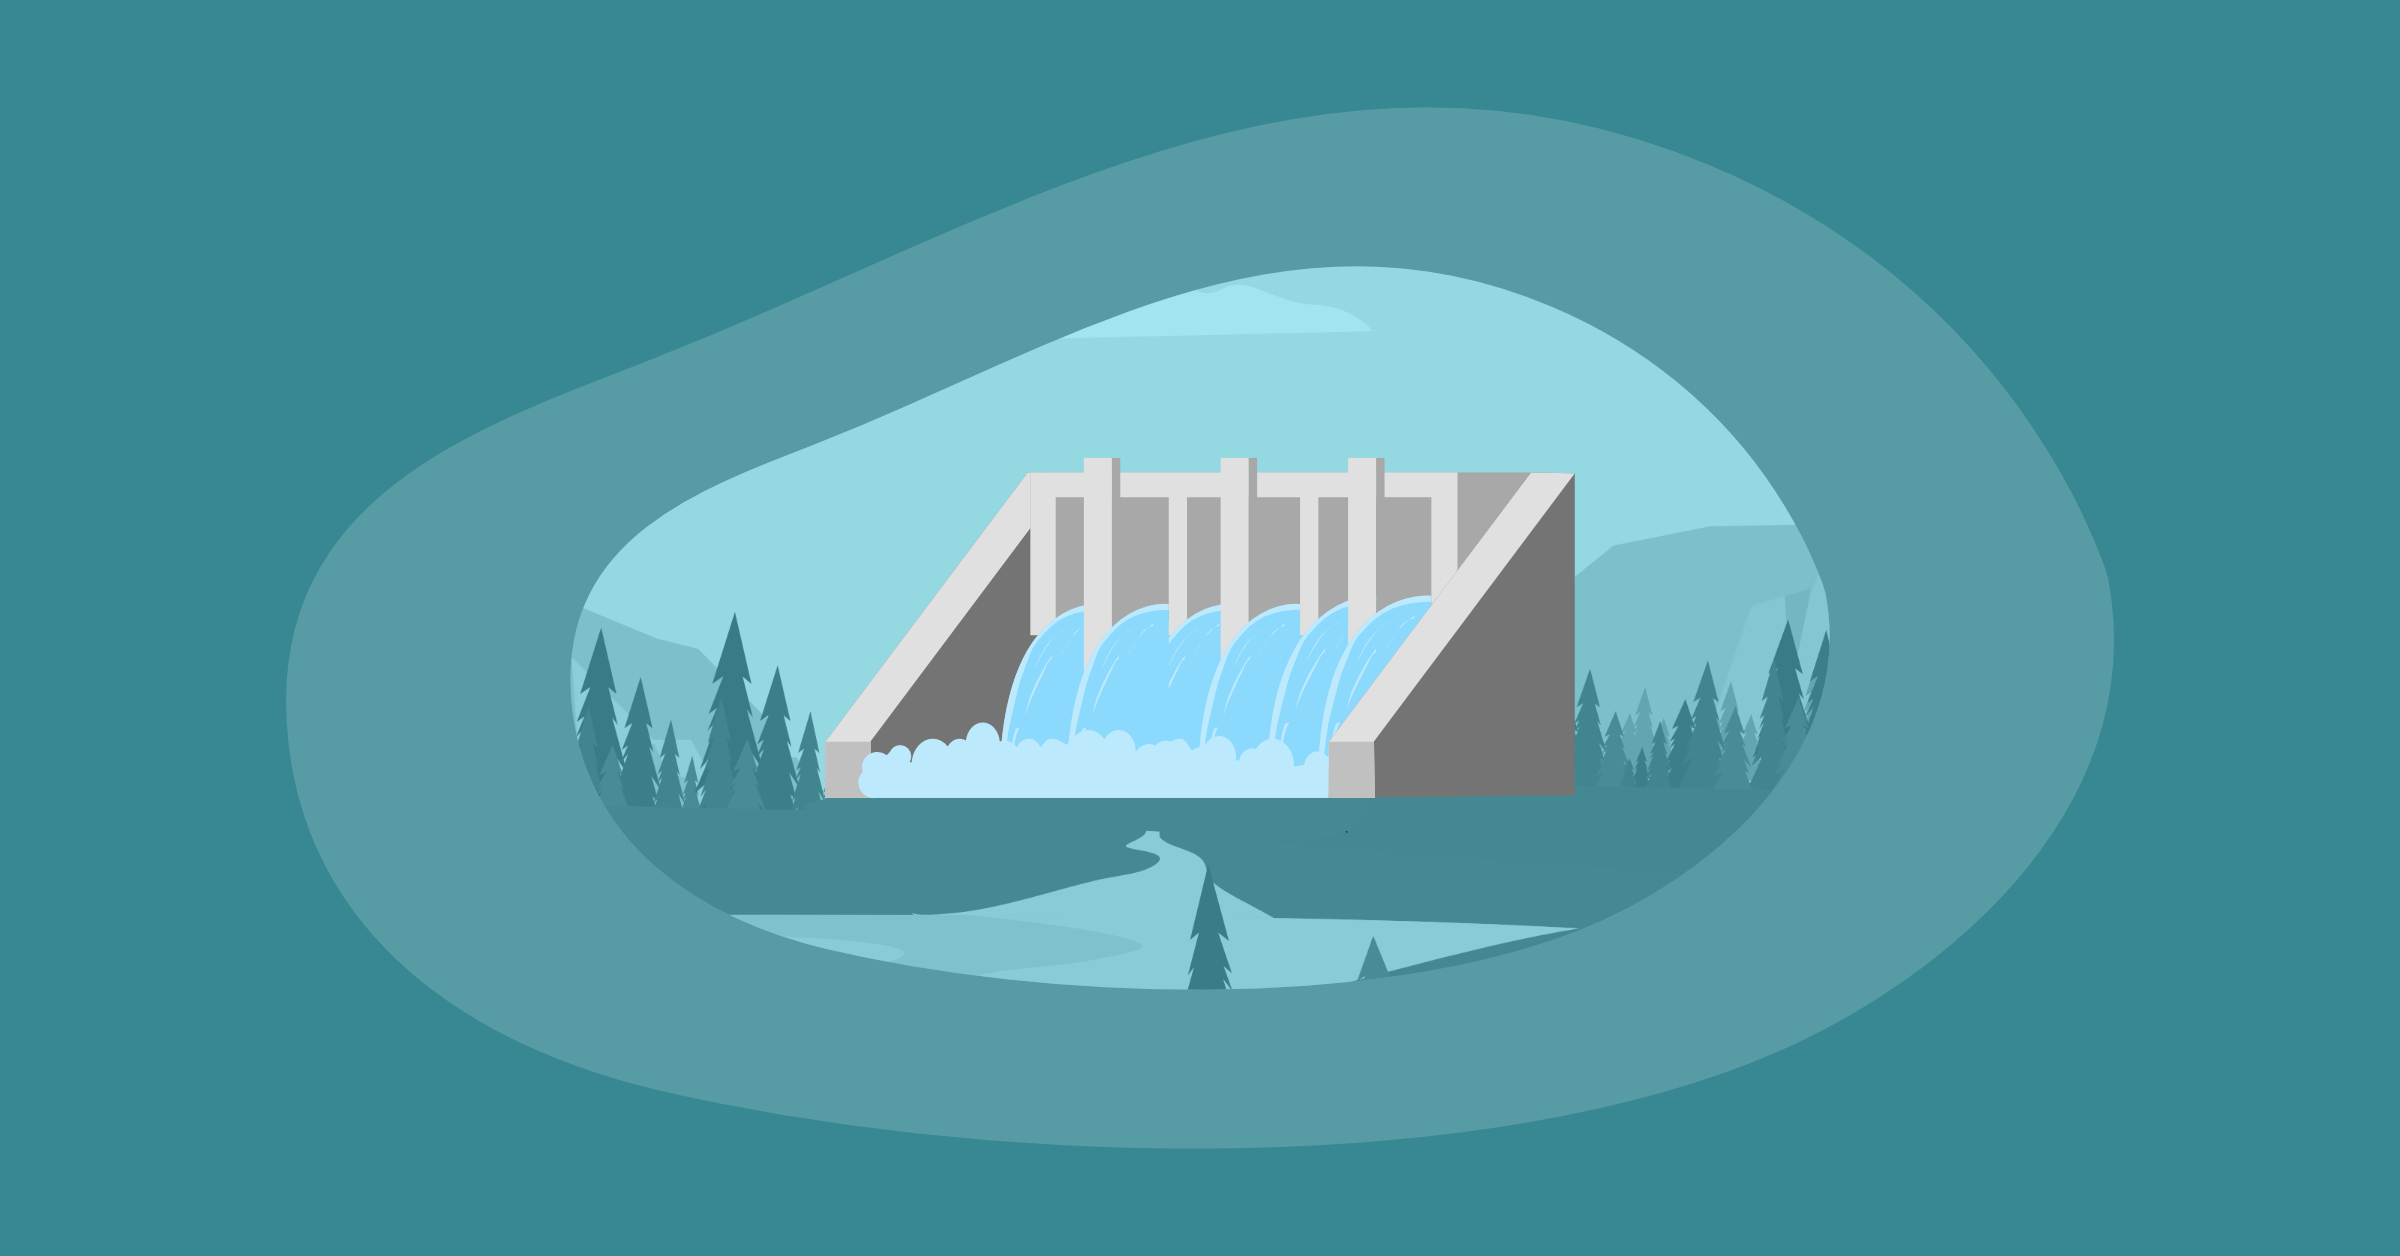 Illustration of hydropower